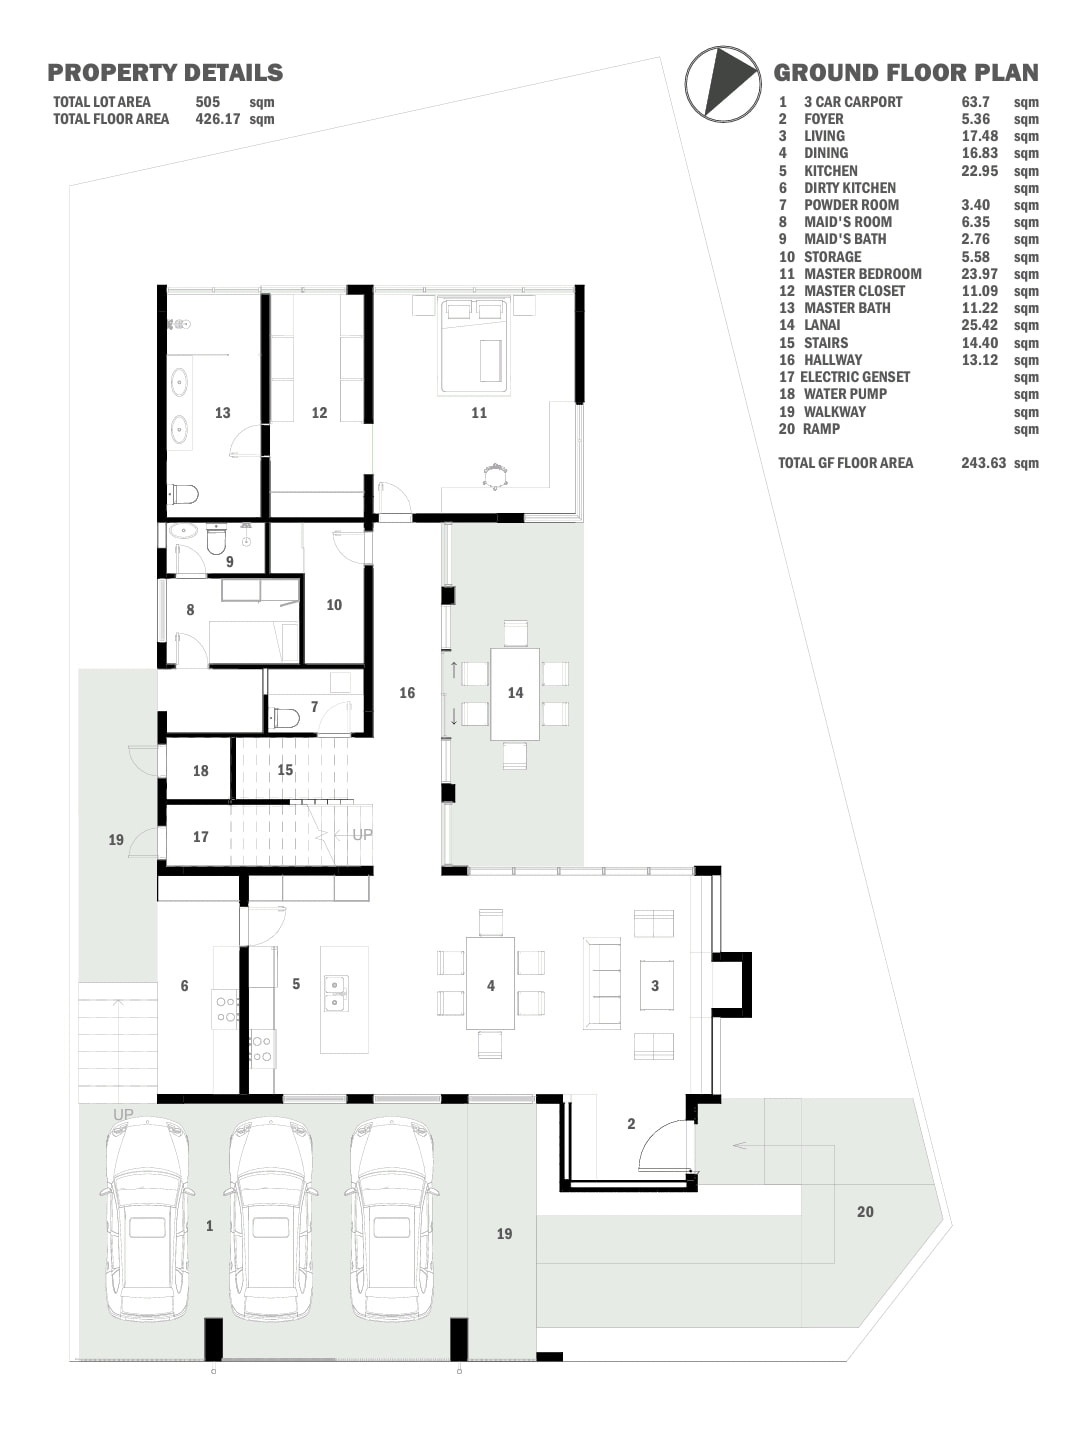 House Floor plan ground floor